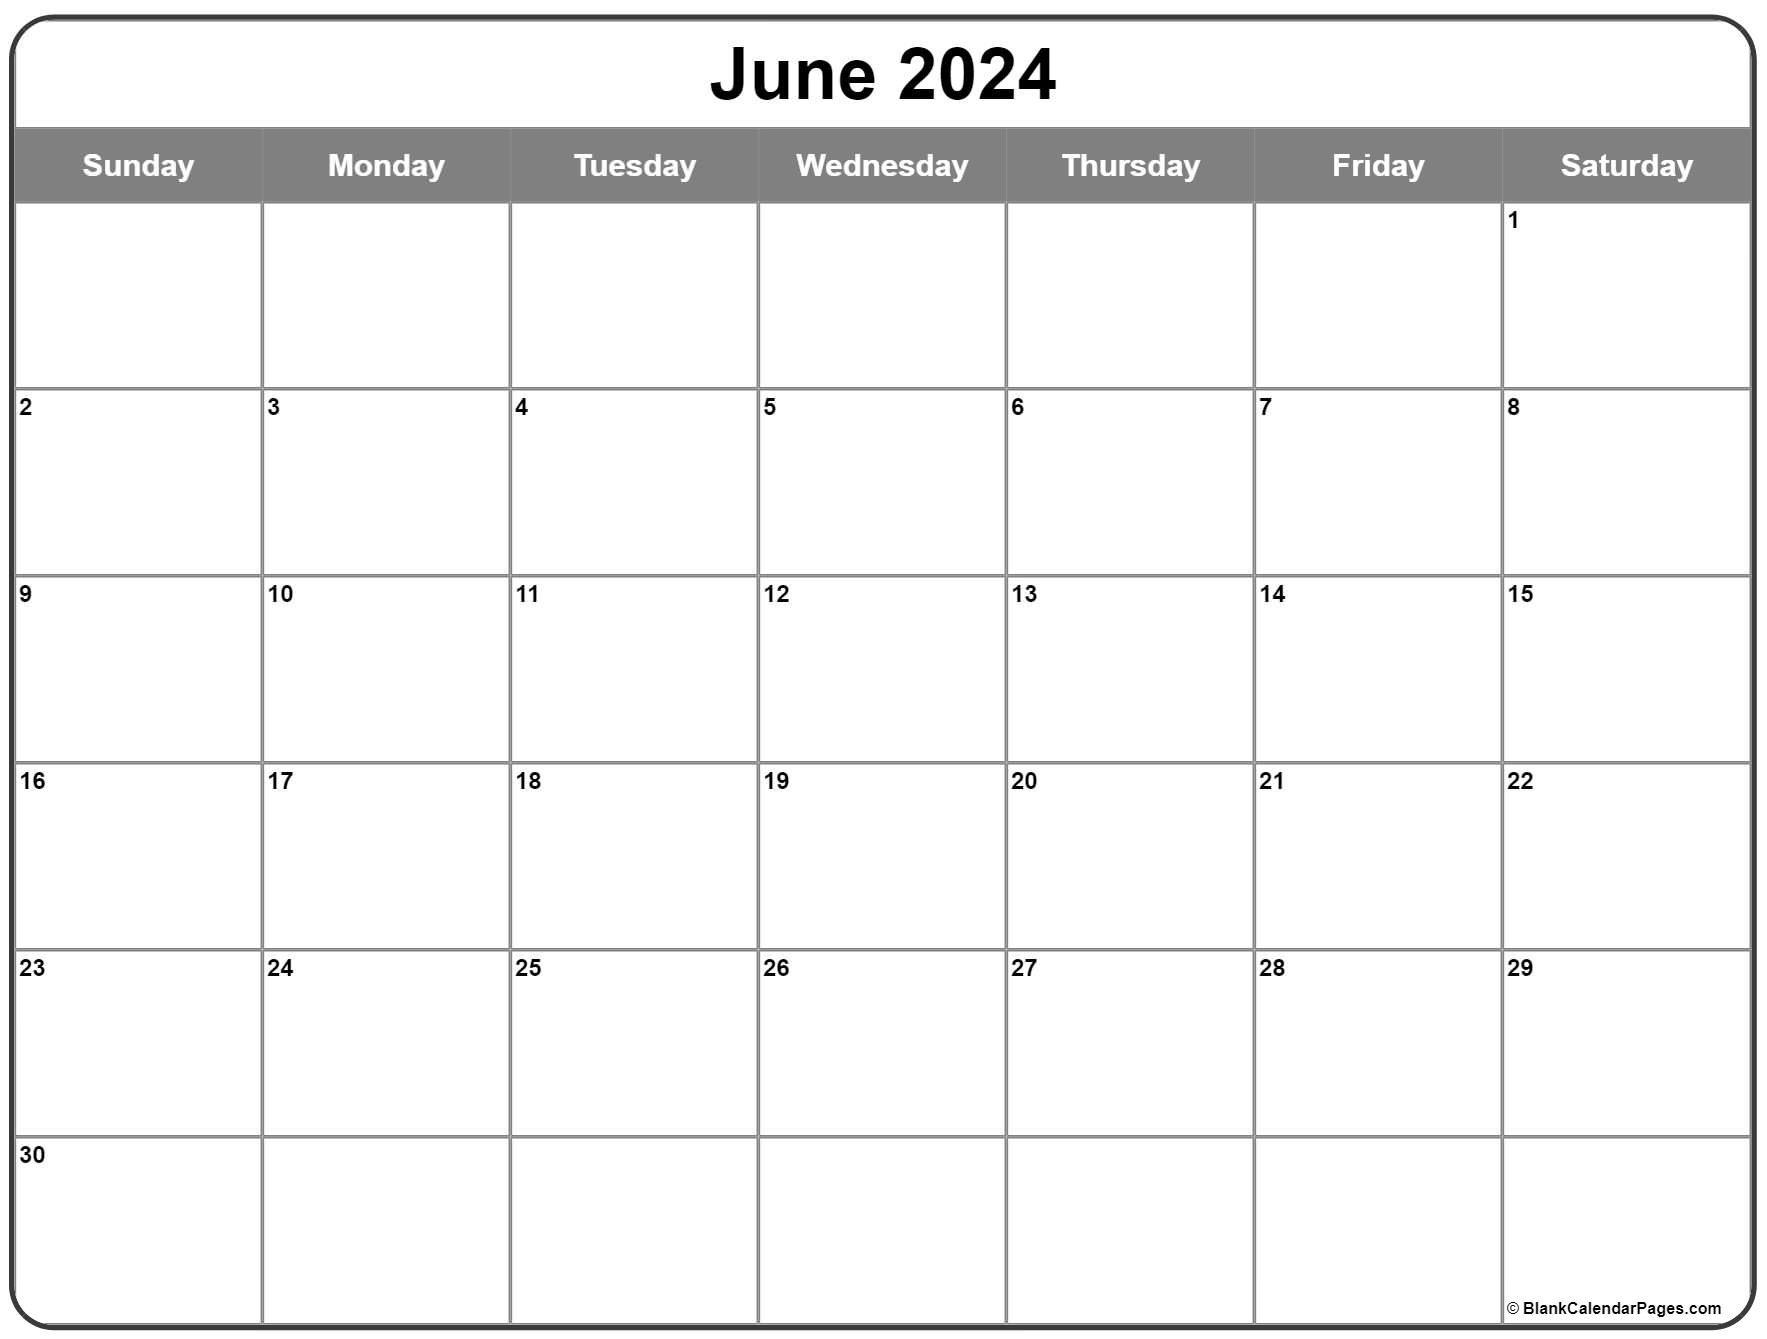 June 2024 Calendar Free Printable Calendar | Free Printable 2024 June Calendar